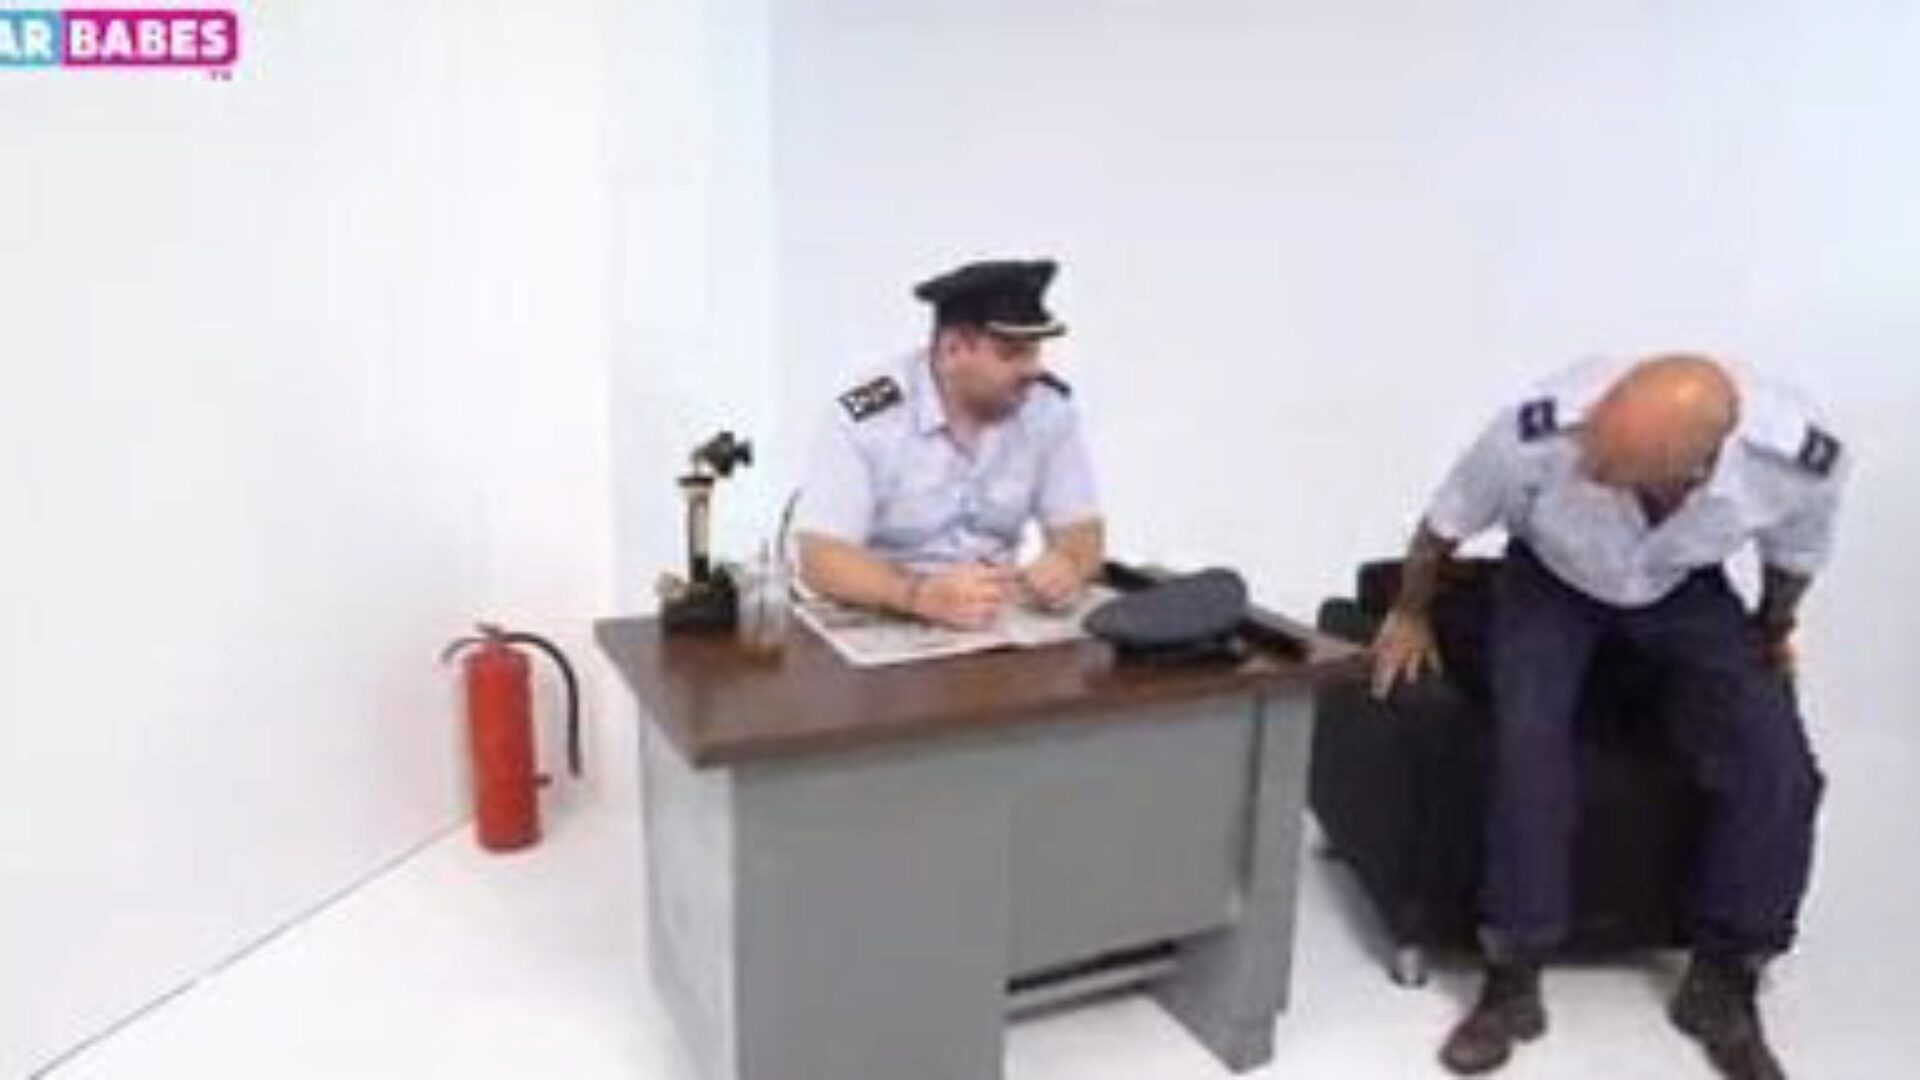 sugarbabestv: ضباط الشرطة اليونانية متعطشا المرح